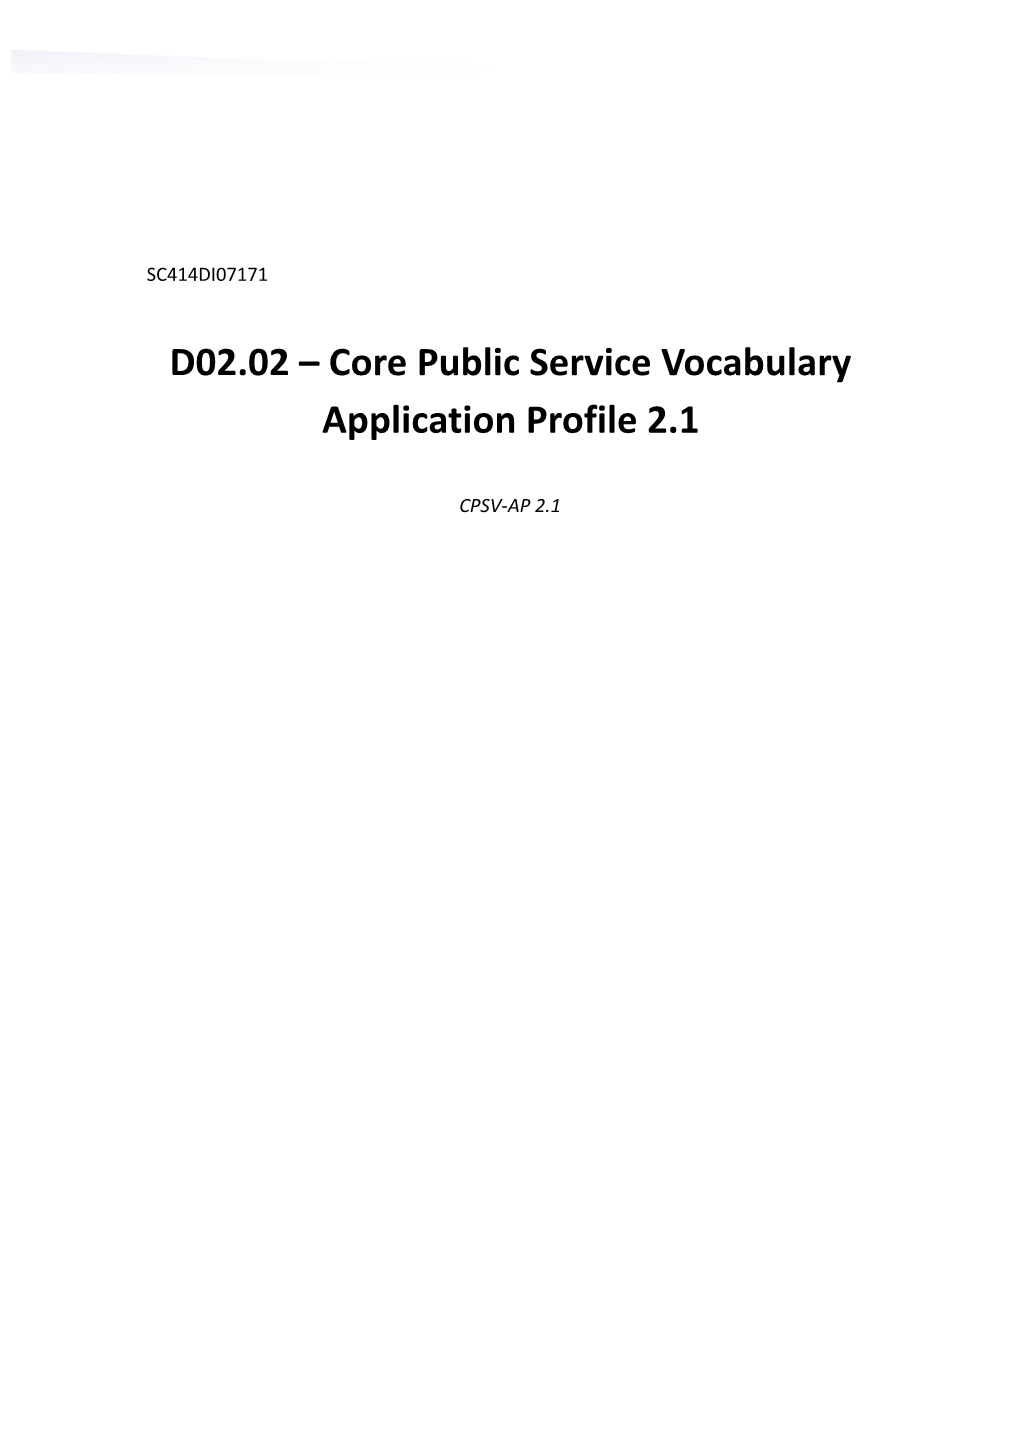 D02.02 Core Public Service Vocabulary Application Profile 2.1